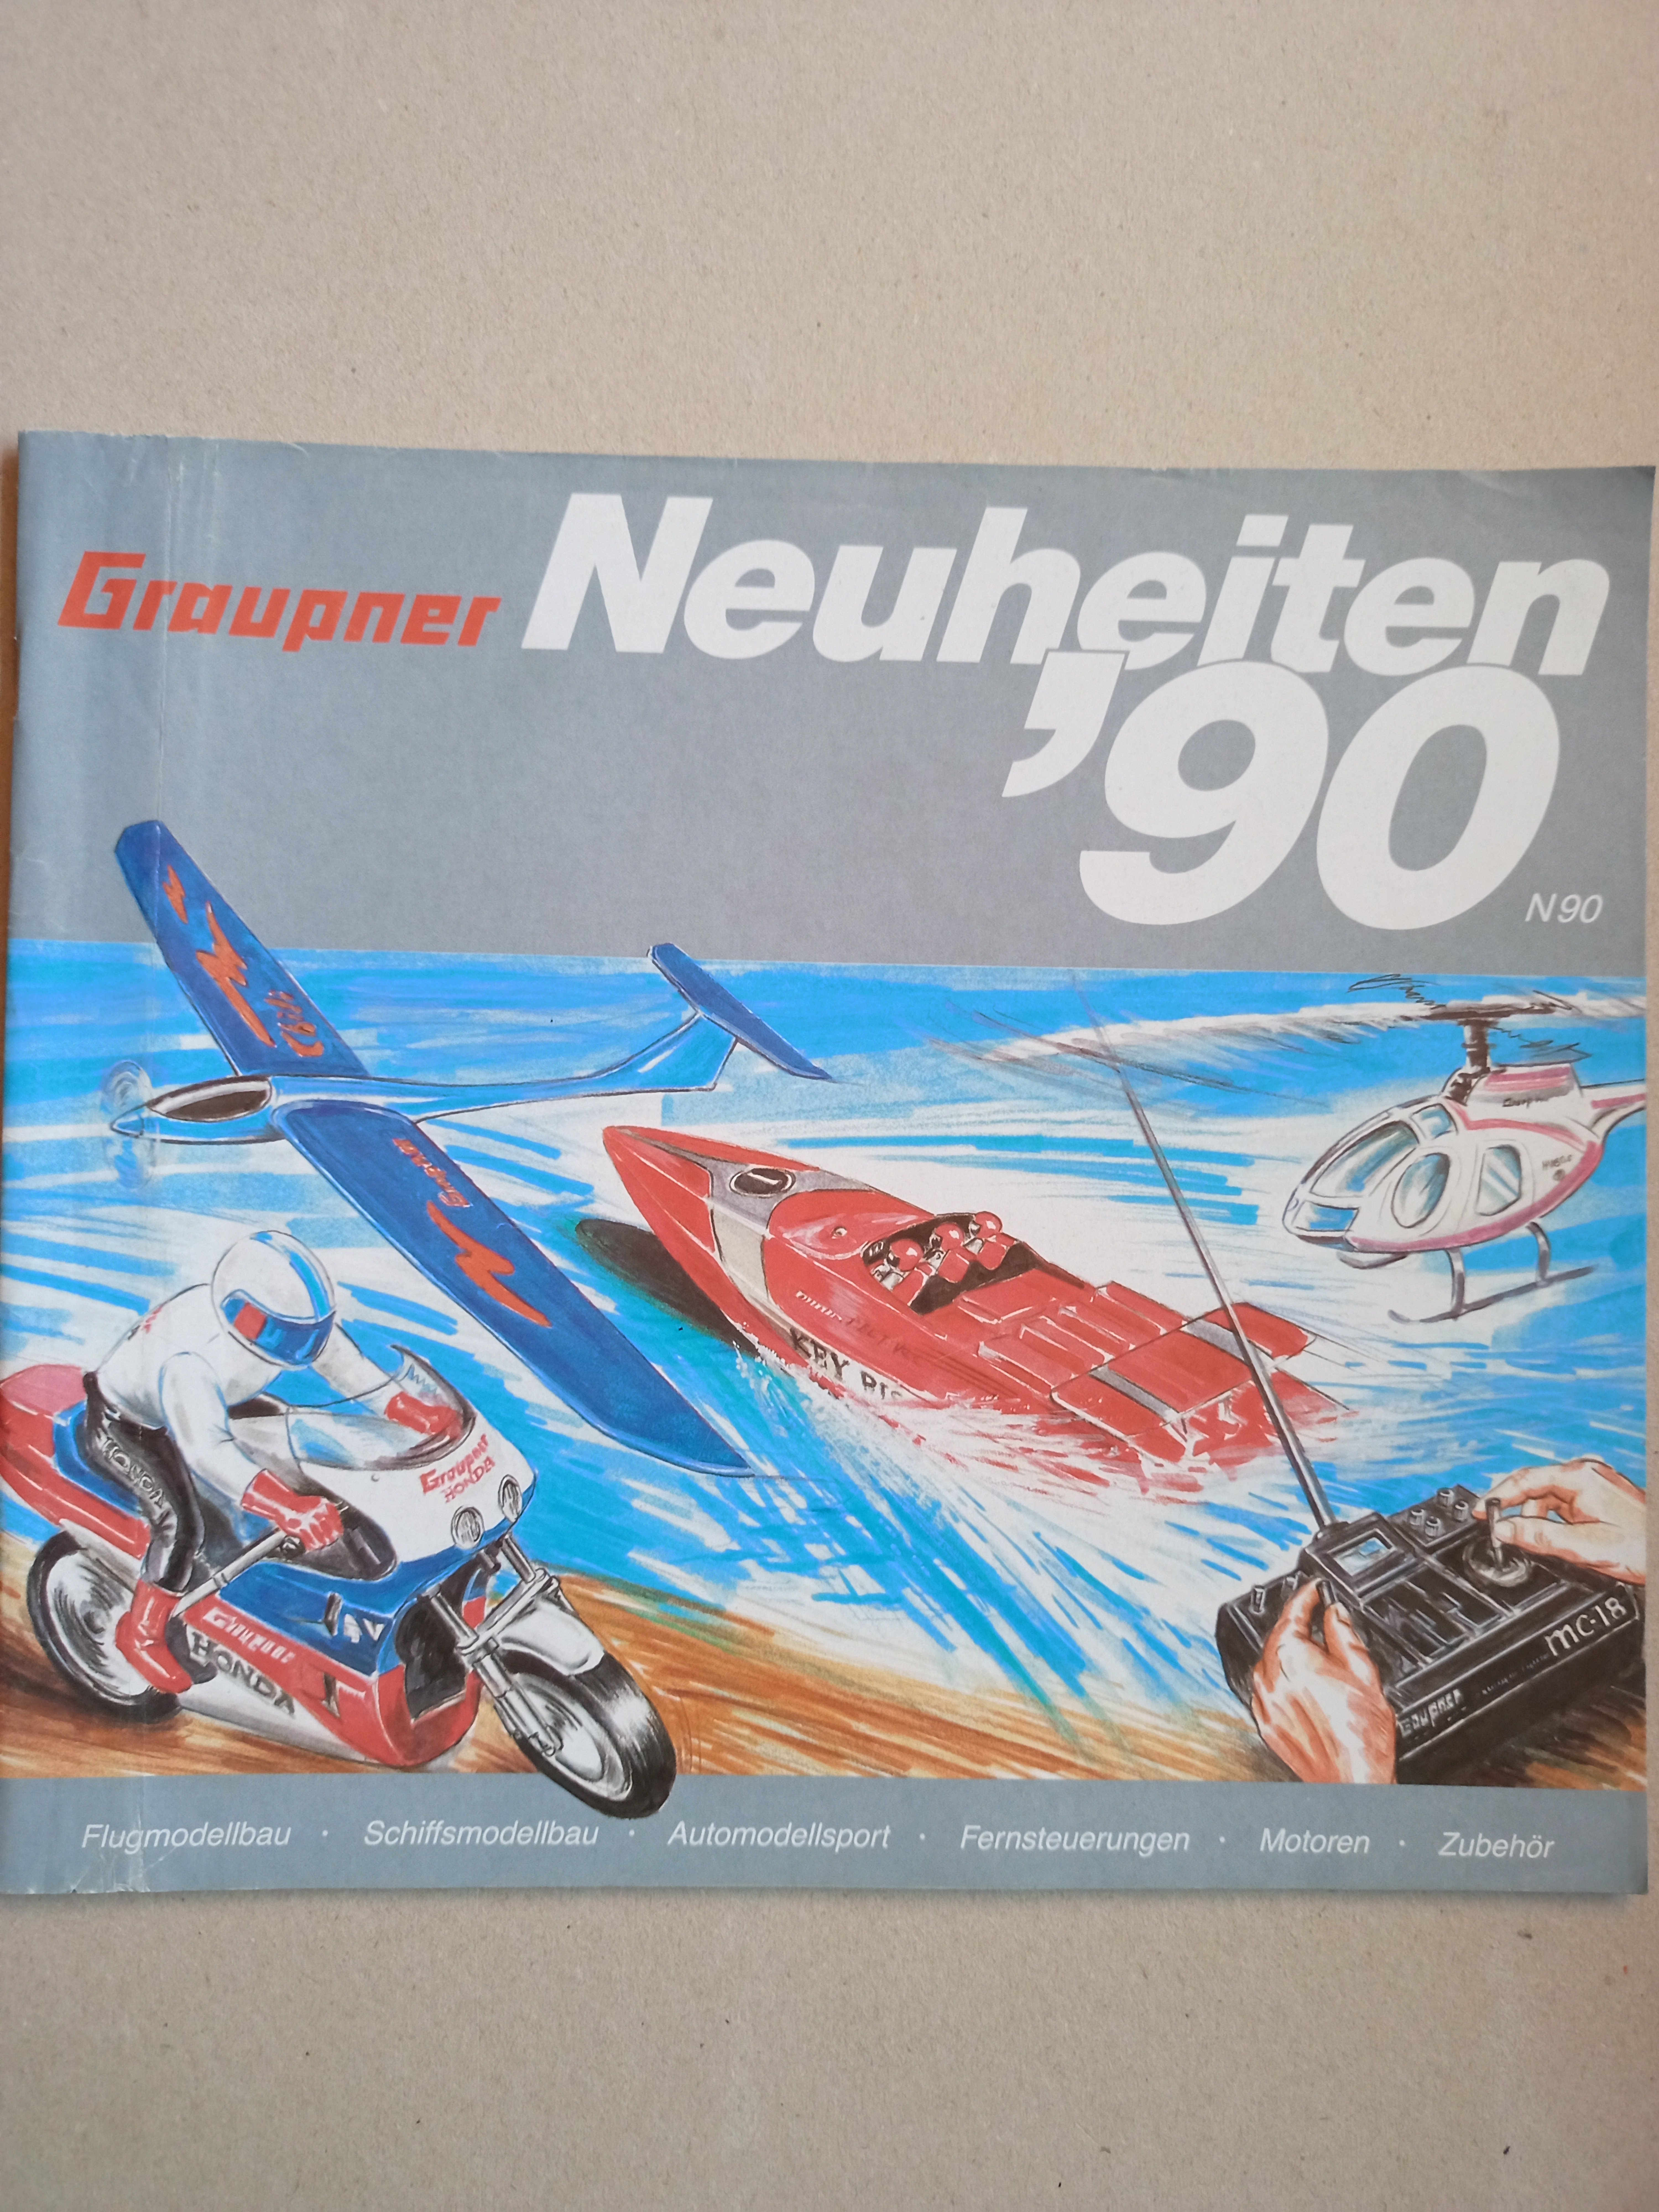 Graupner Neuheiten 1990 (Deutsches Segelflugmuseum mit Modellflug CC BY-NC-SA)